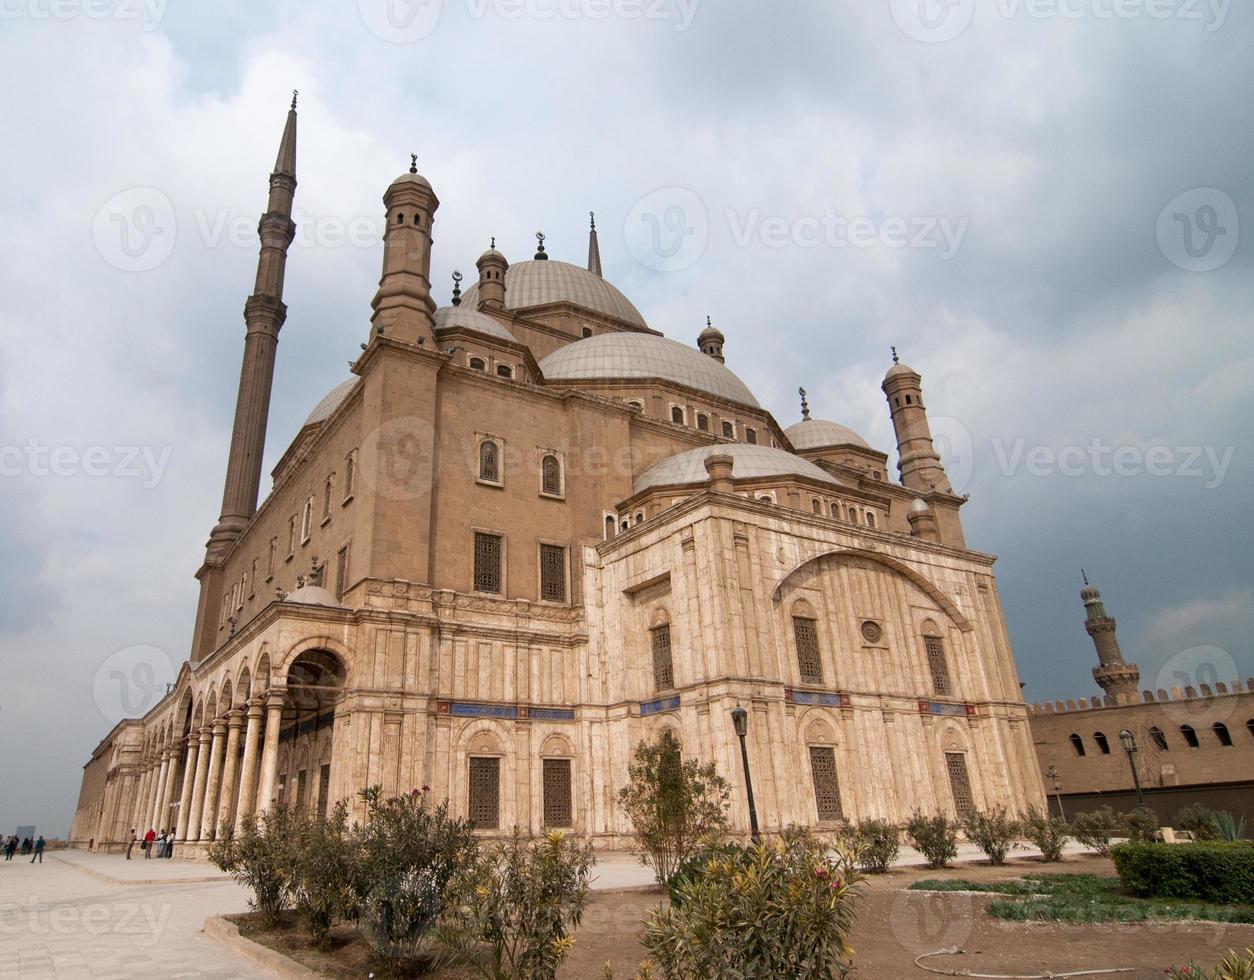 mohamed ali moskee, salade citadel - Cairo, Egypte foto